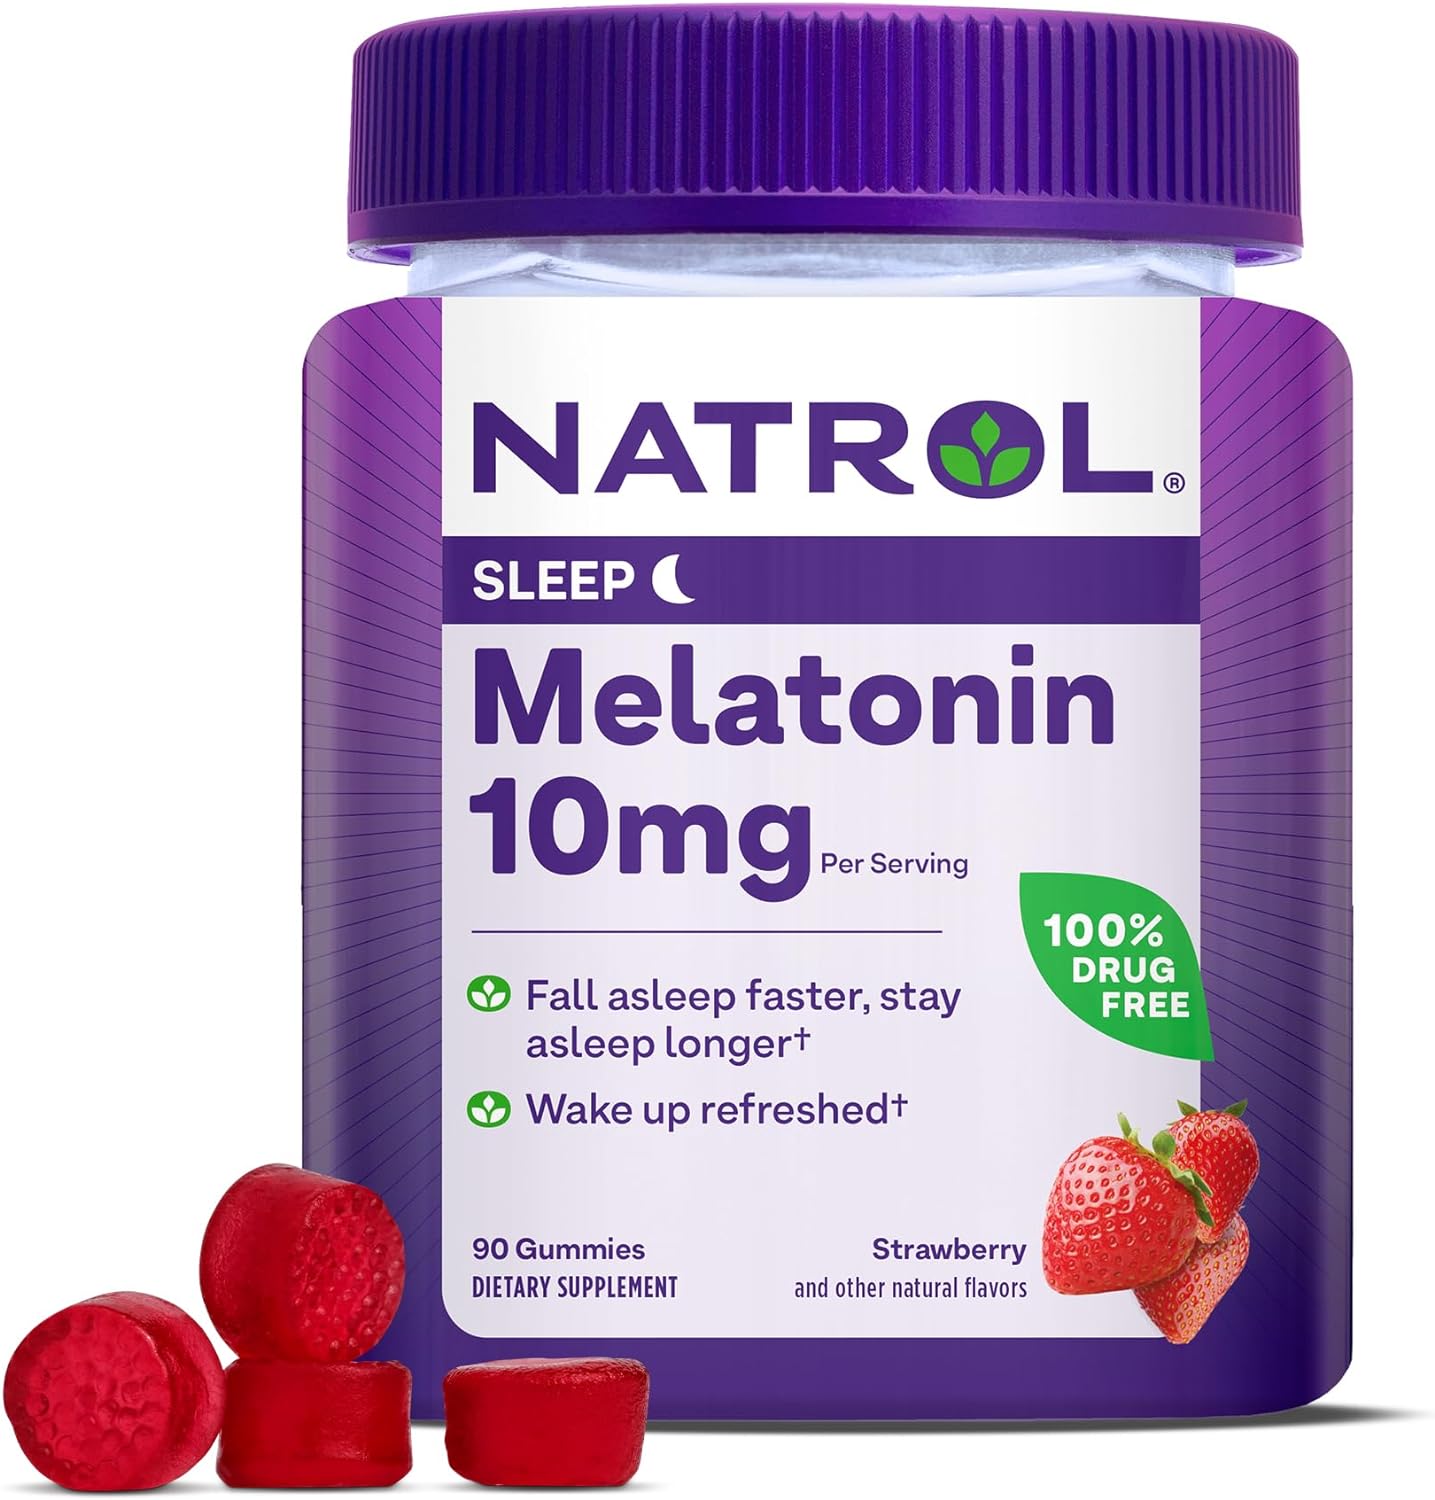 Natrol Melatonin 10Mg Dietary Supplement Review